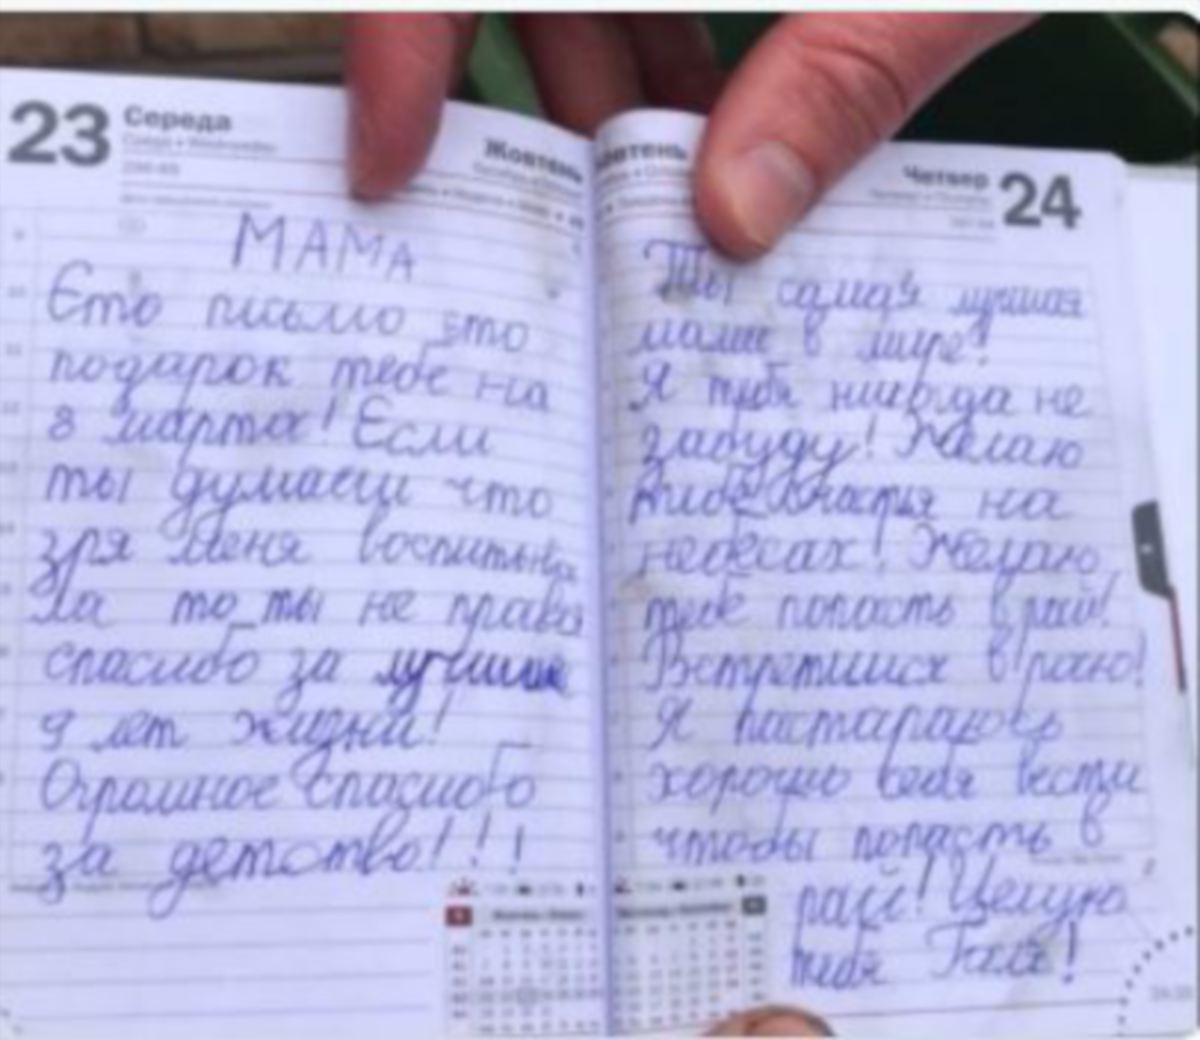 SURAT Galia untuk ibunya yang tular di media sosial. FOTO Twitter Anton Herashchenko